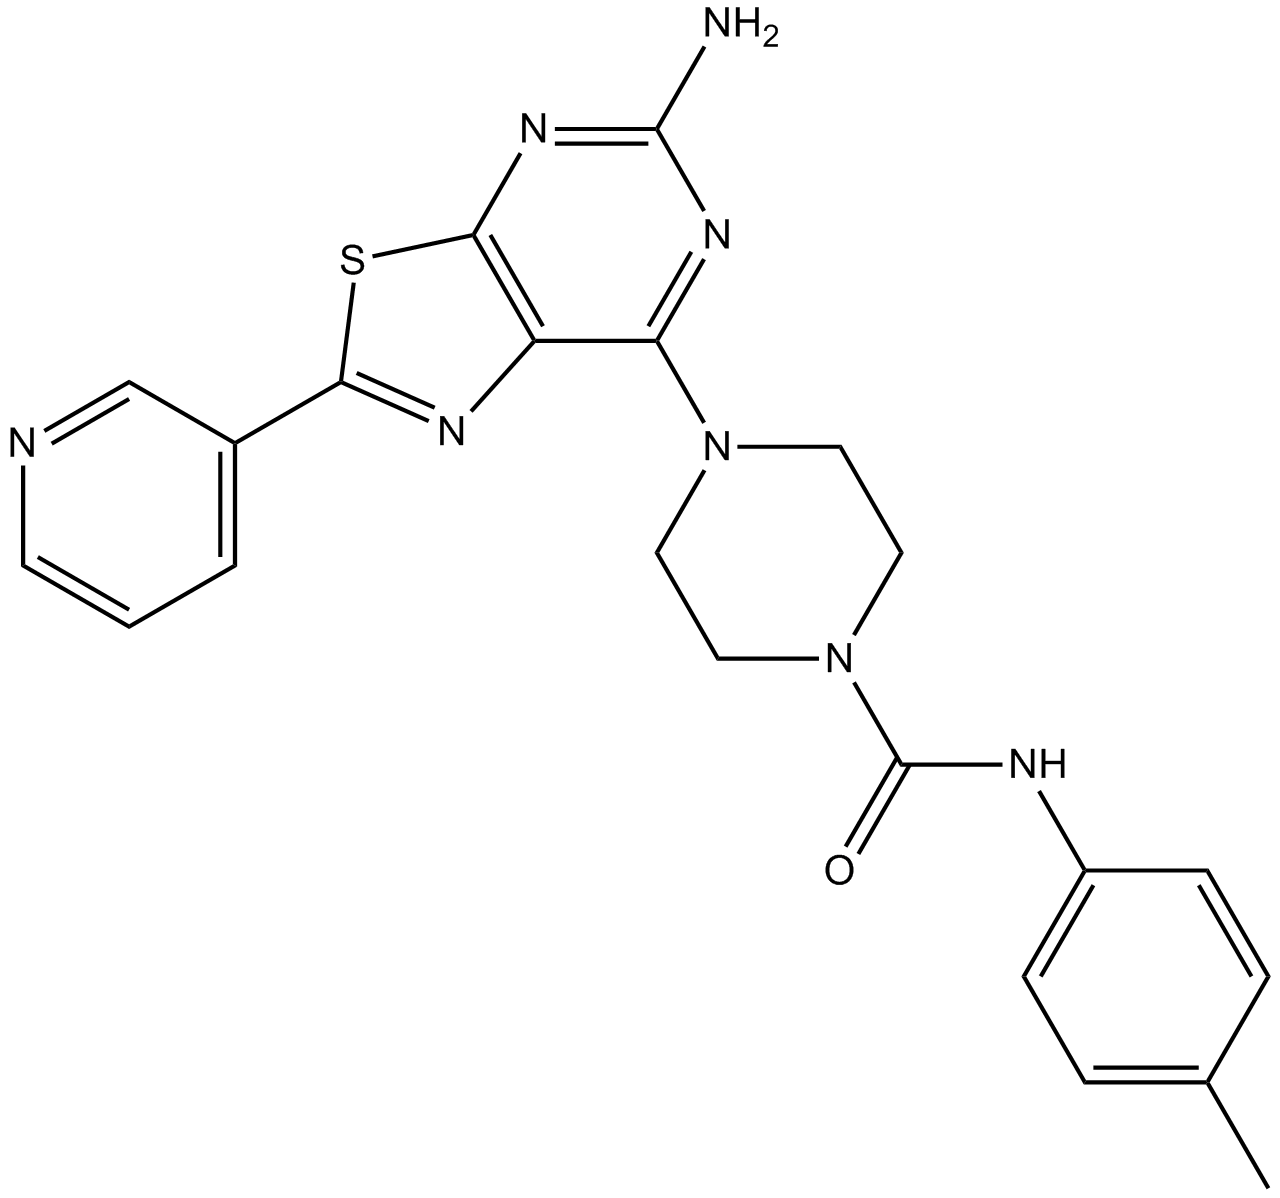 PI4KIII beta inhibitor 3  Chemical Structure